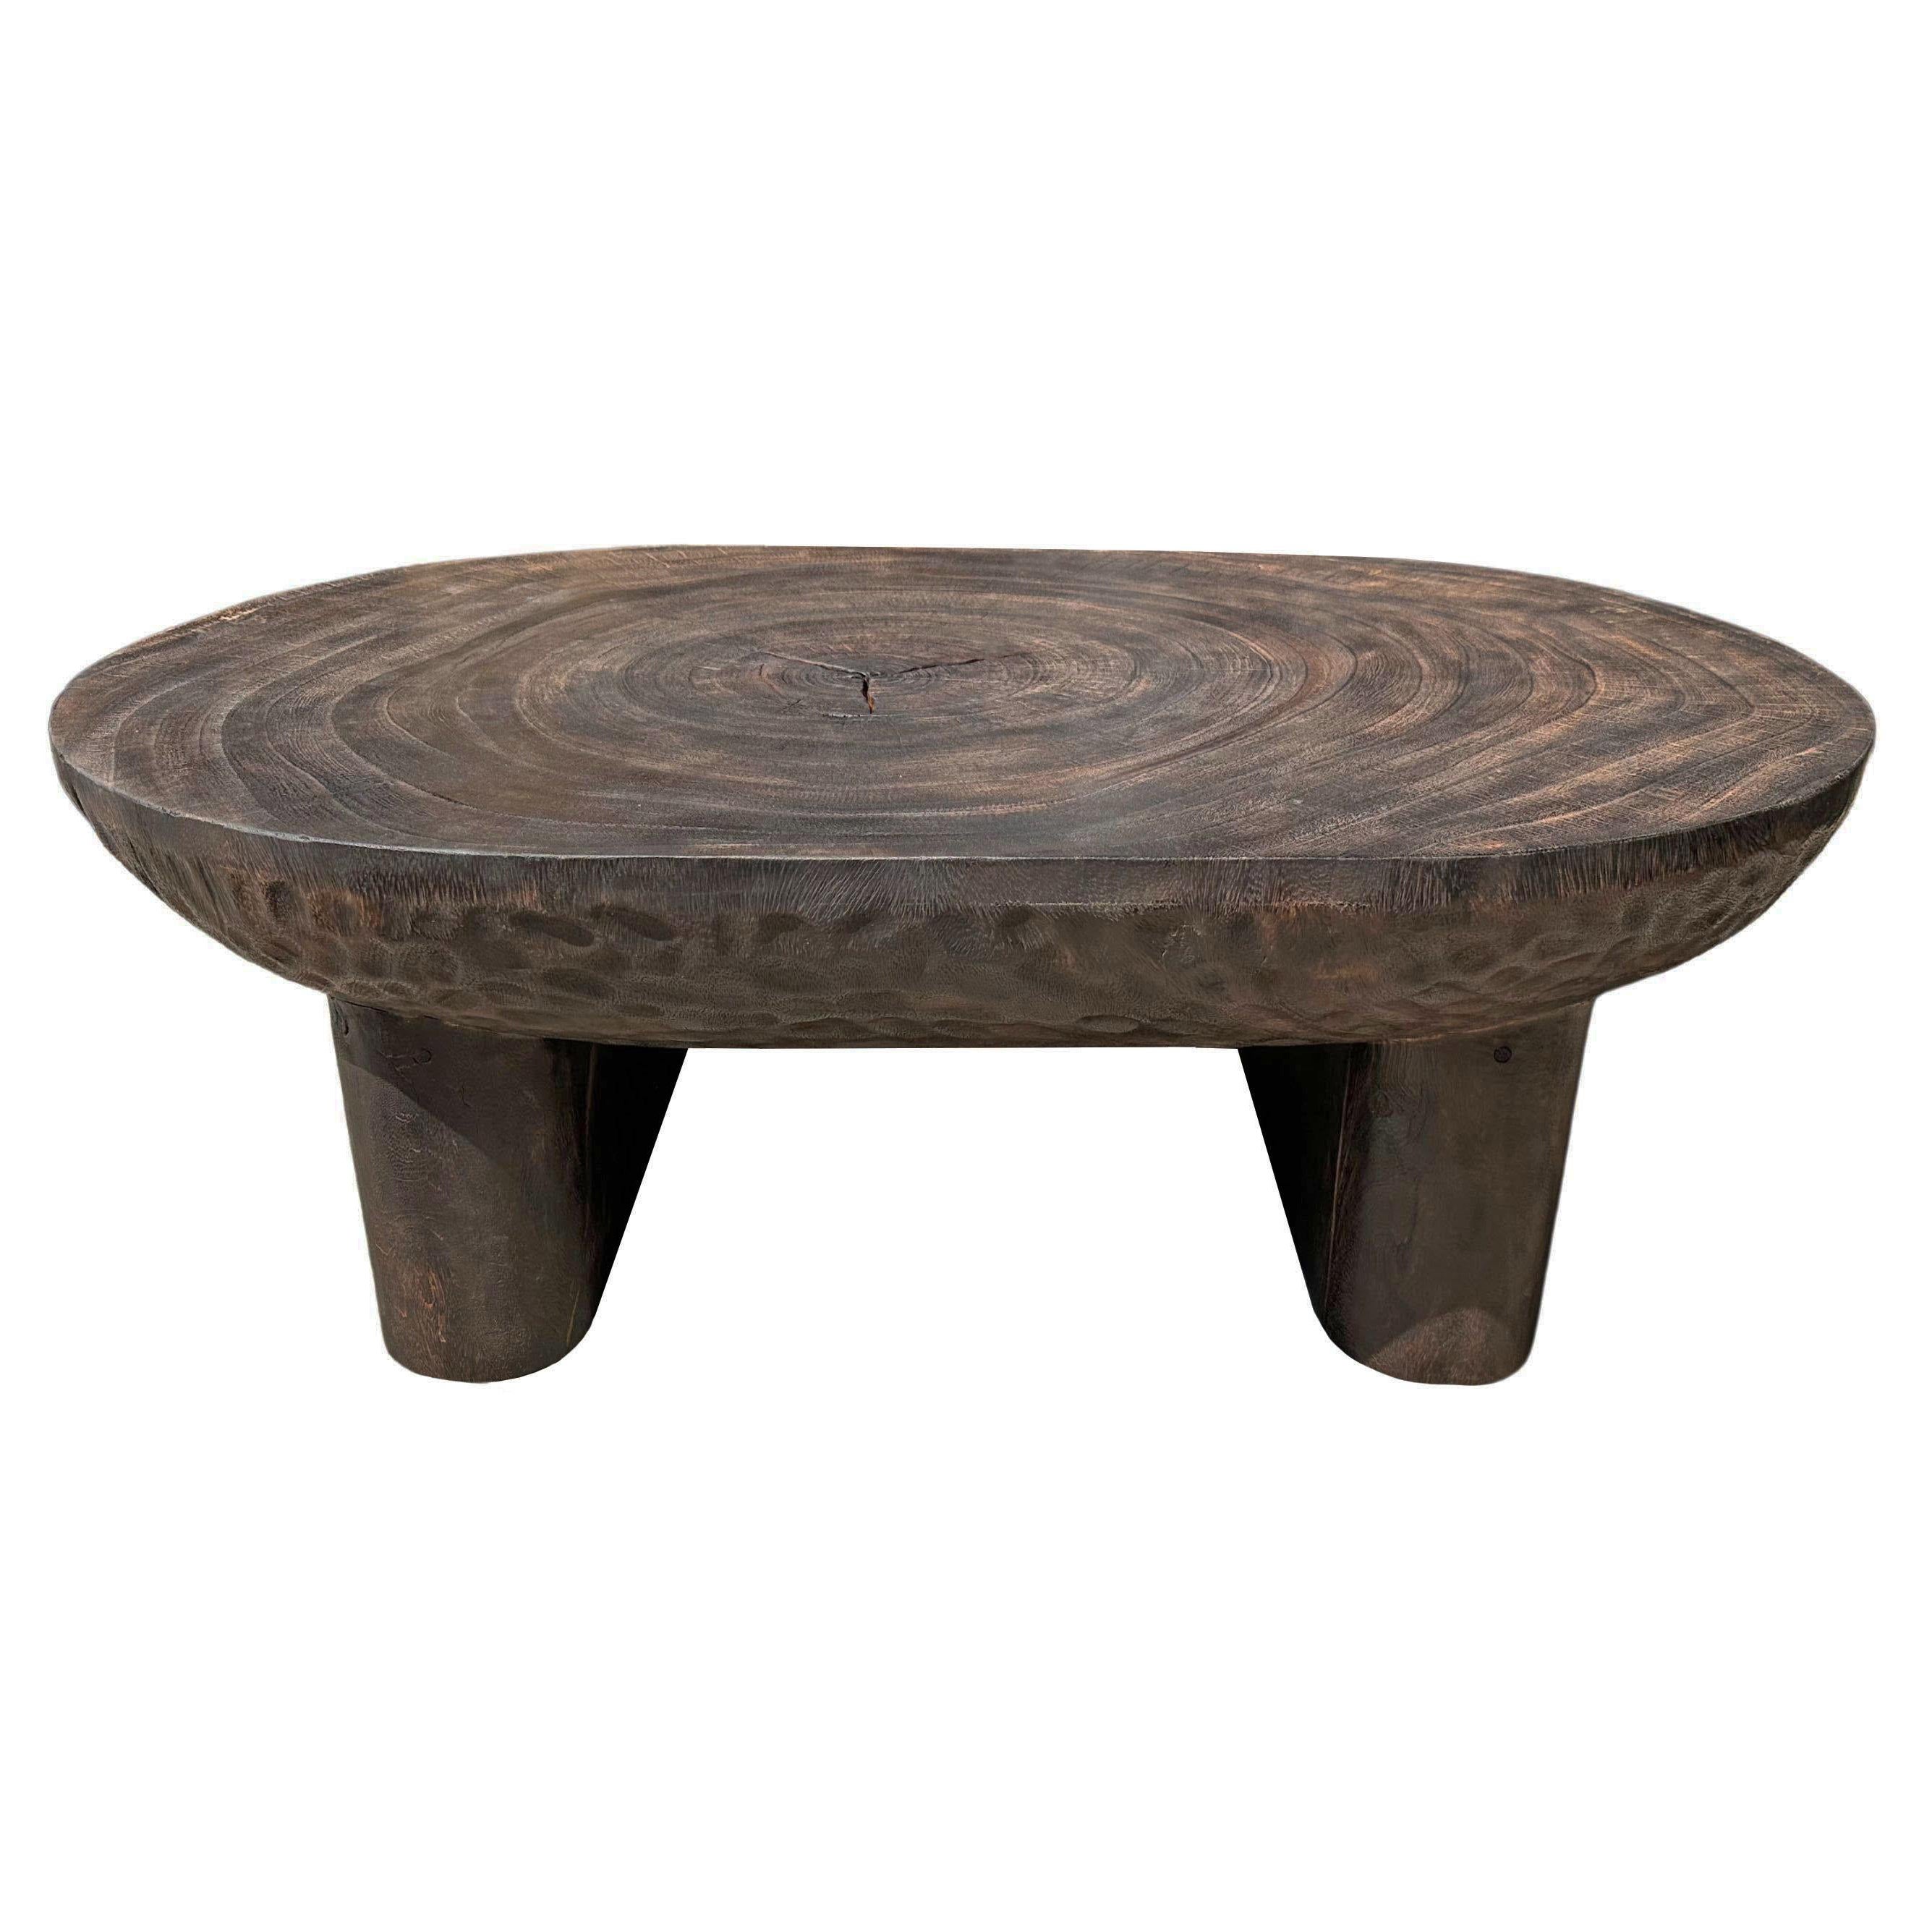 Suar Wood Table Hand-Hewn Detailing Espresso Finish, Modern Organic For Sale